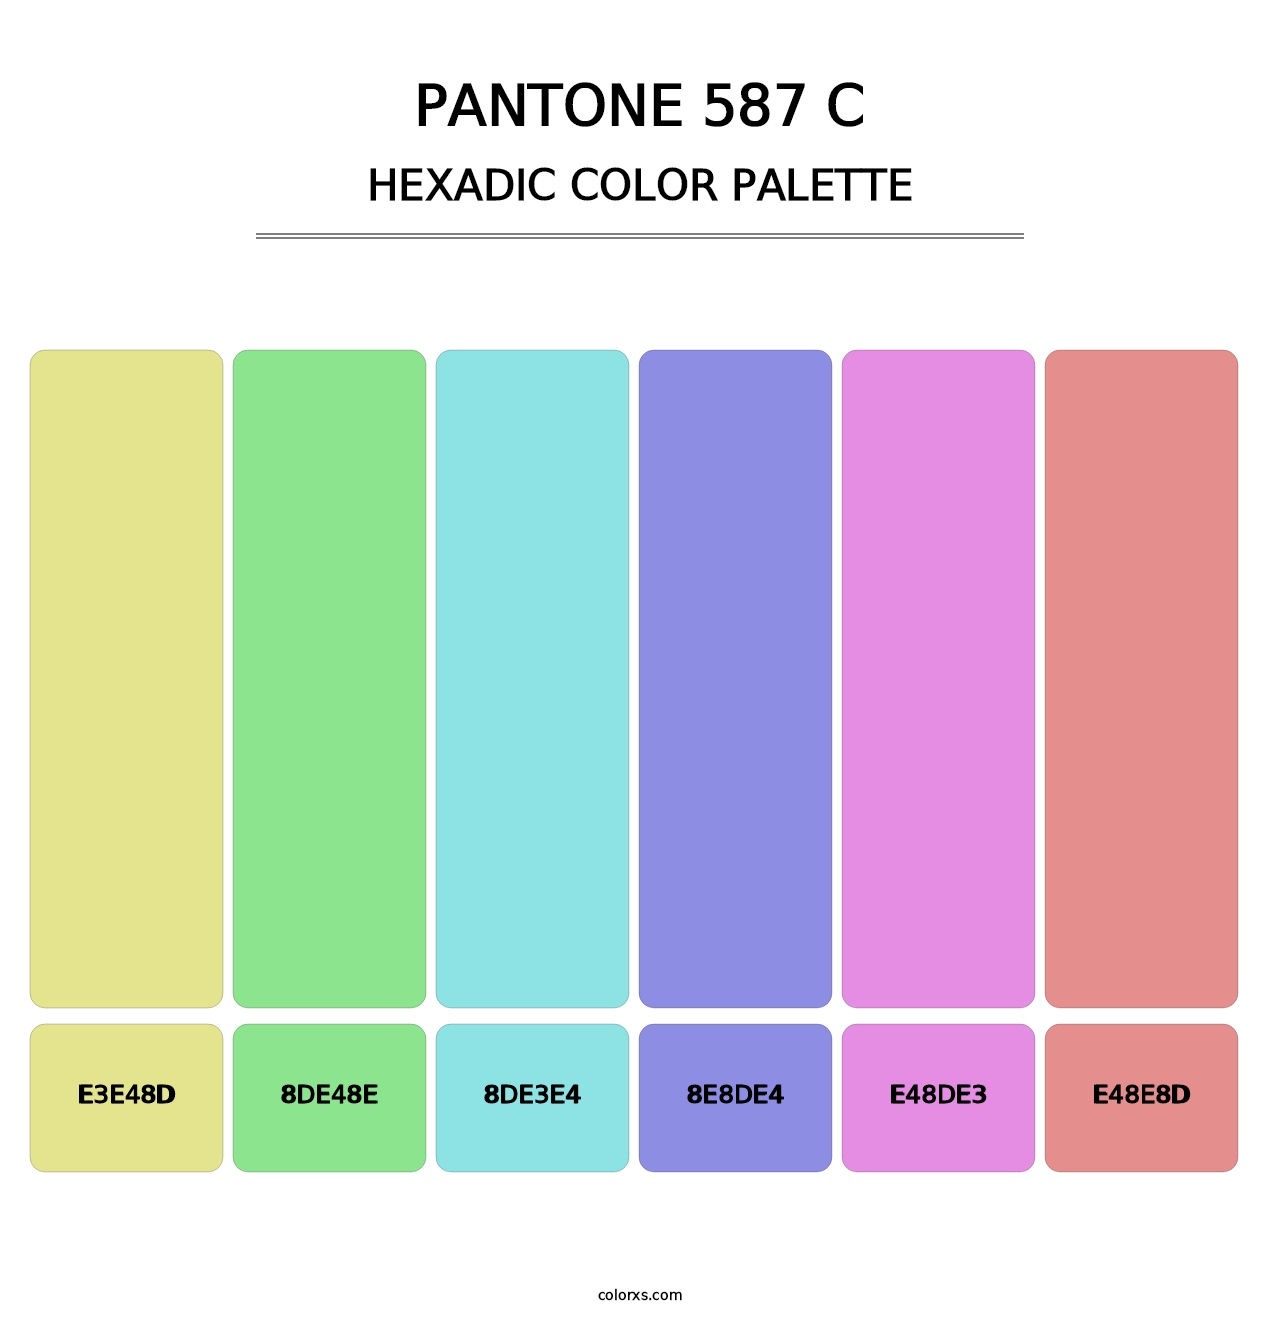 PANTONE 587 C - Hexadic Color Palette